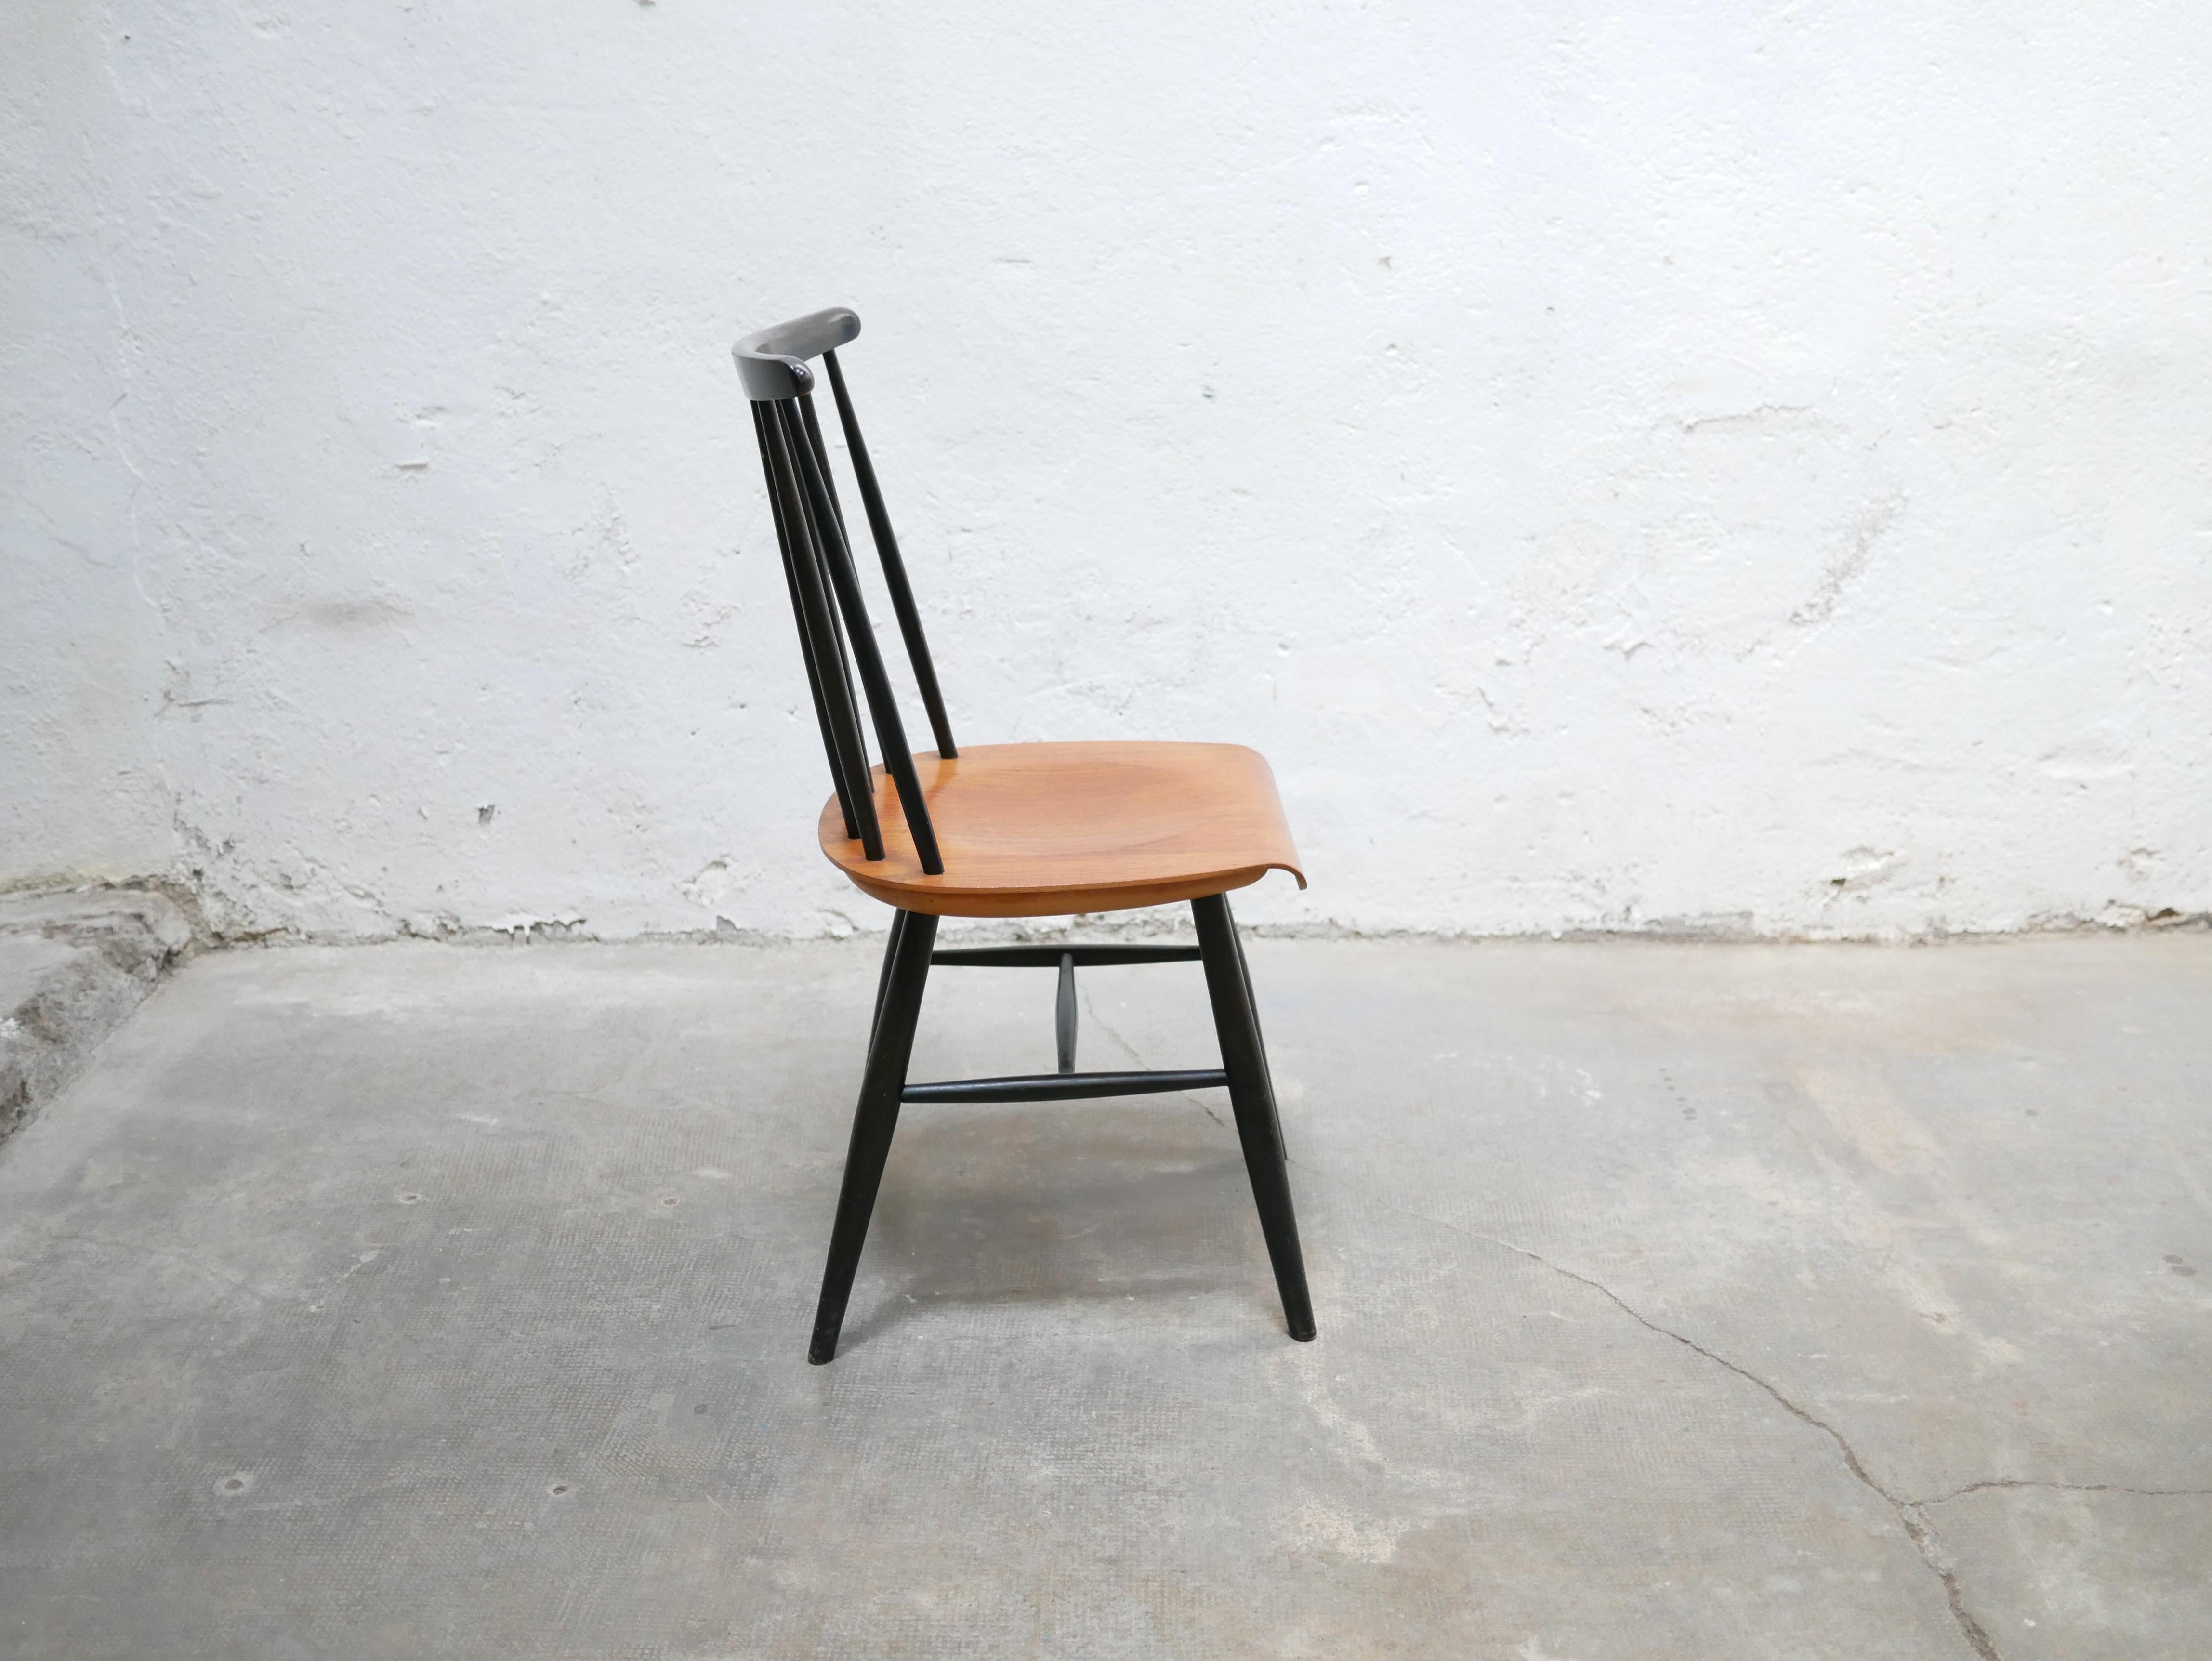 Finnish Vintage Scandinavian chair by I.Tapiovaara model Fanett